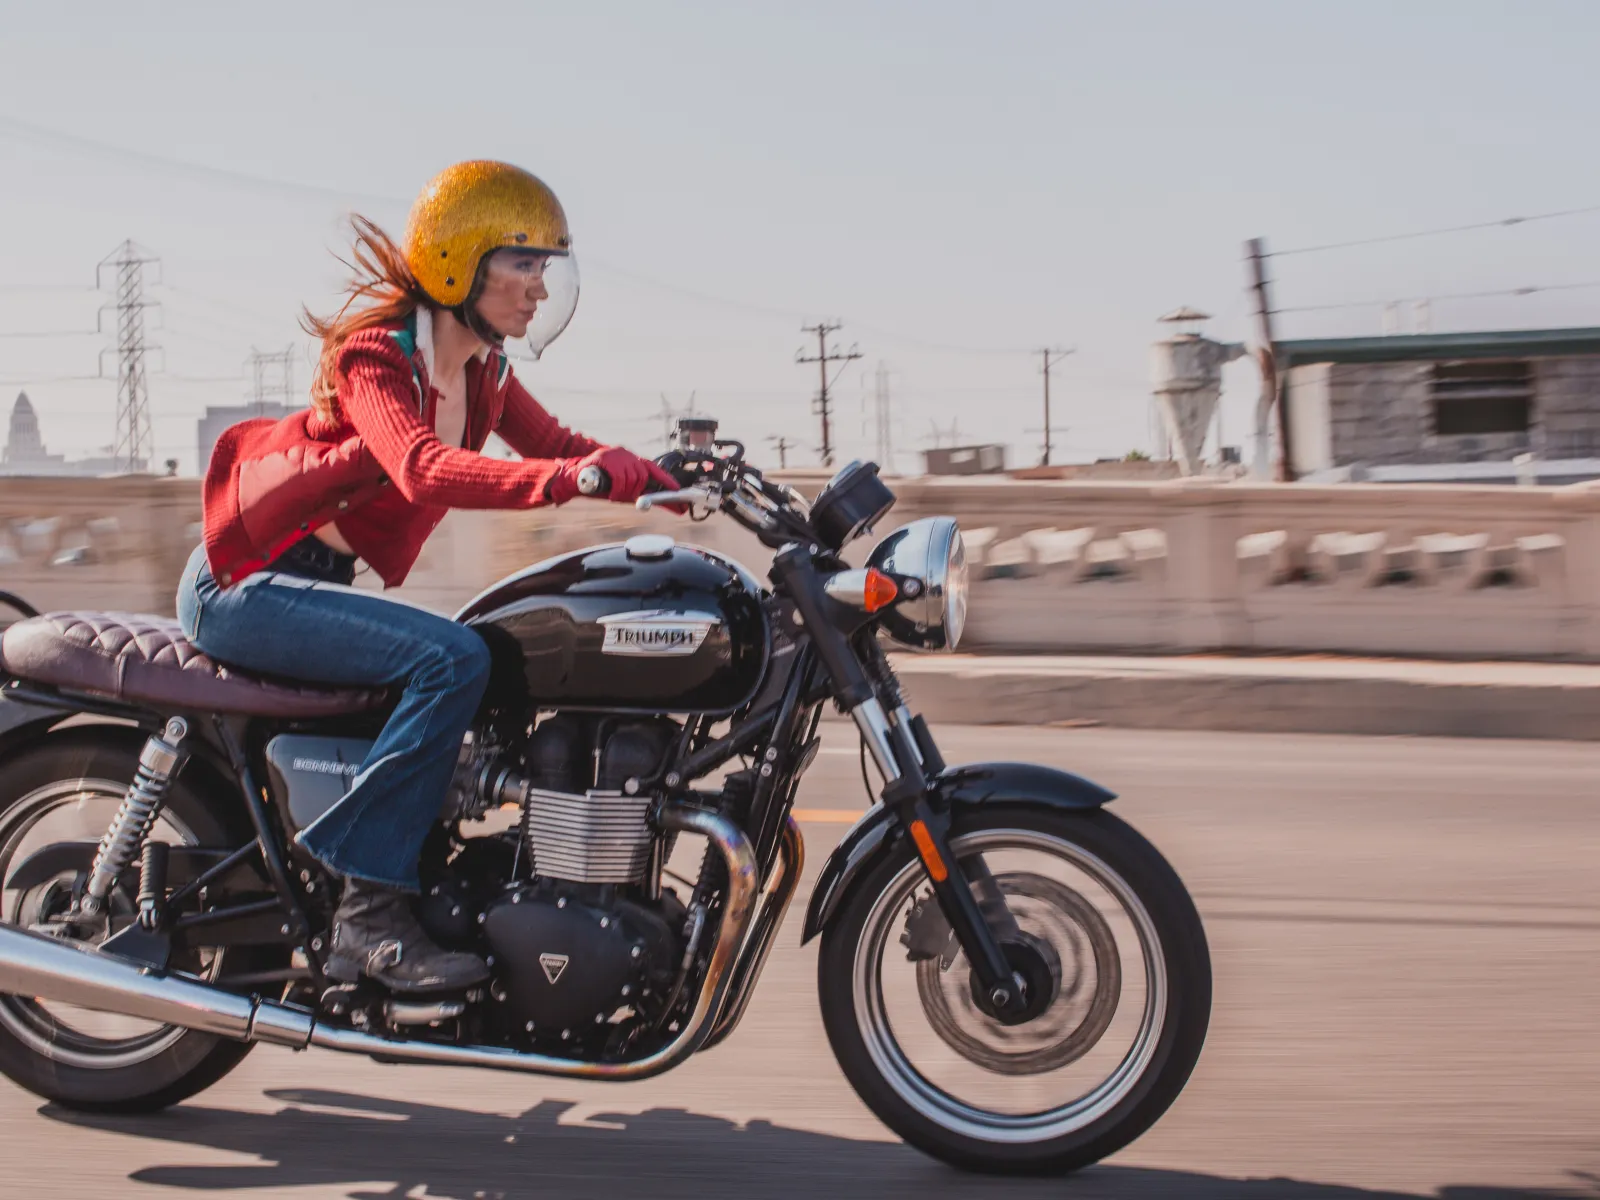 Top 10 Motorcycle Rides in Los Angeles | Discover Los Angeles